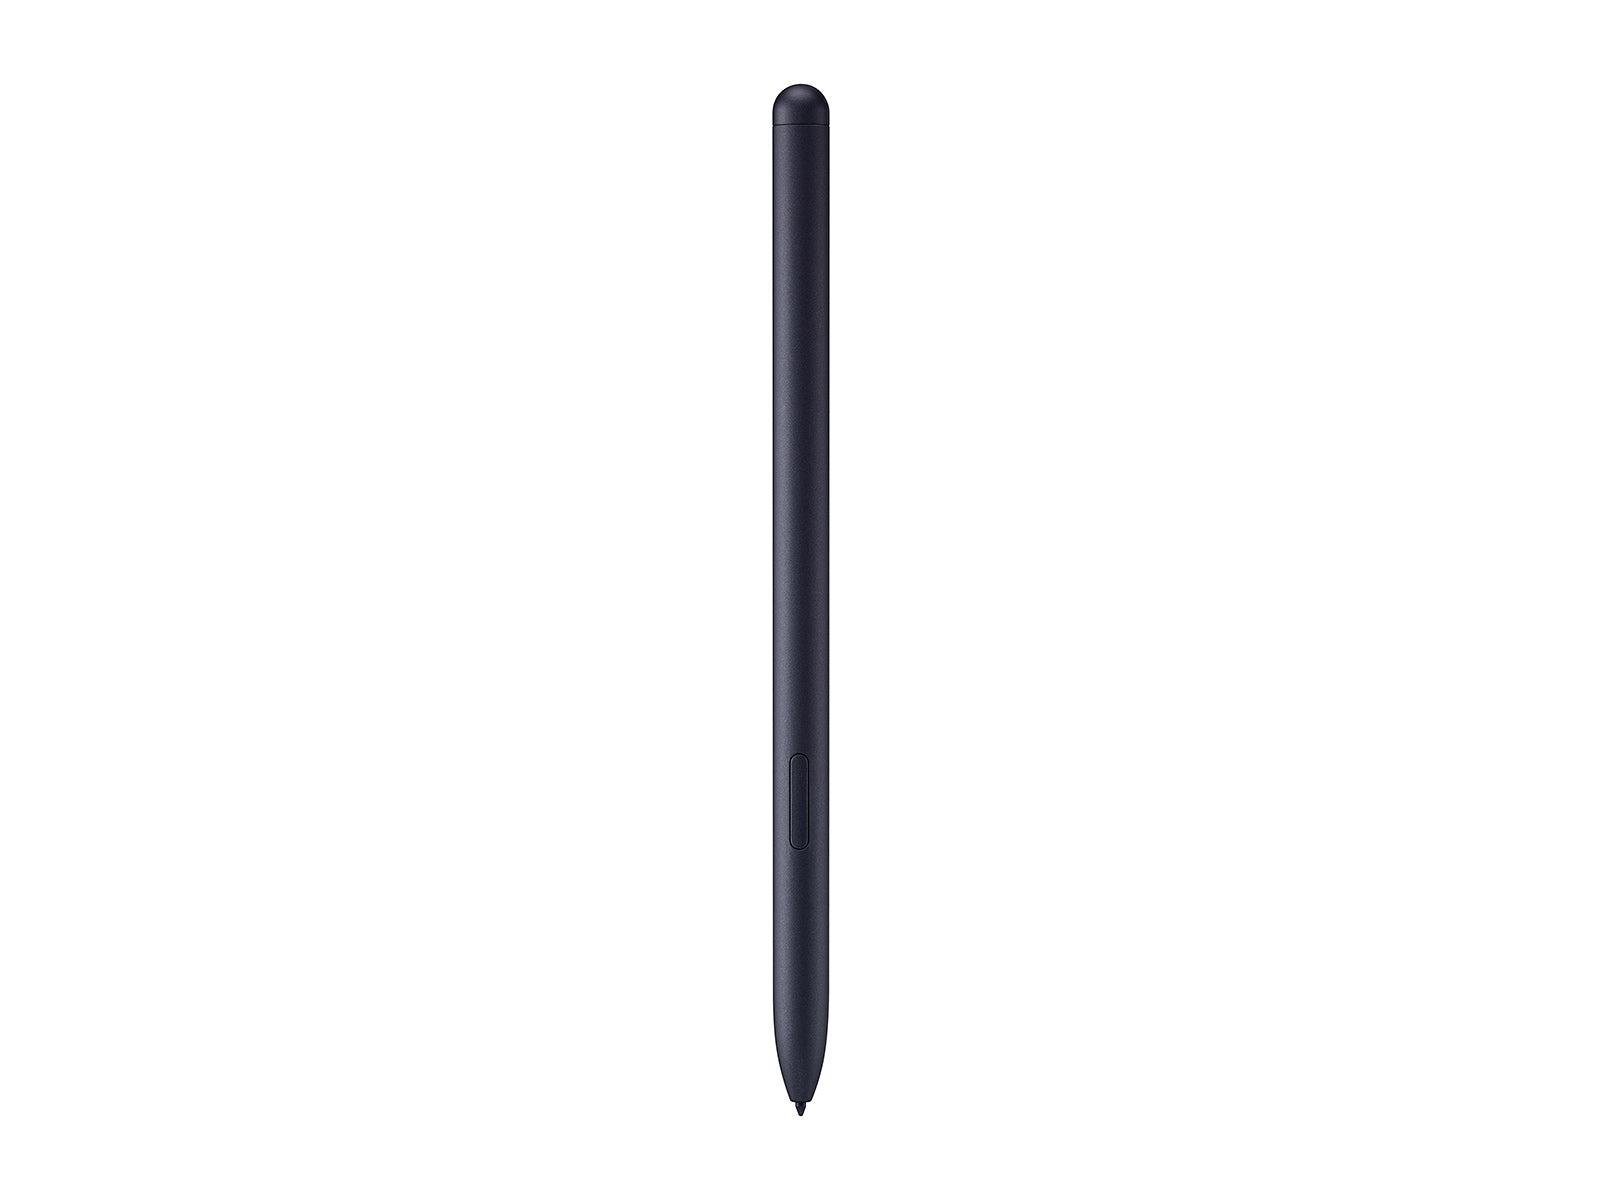 Samsung Ej-Pt870 Stylus Pen Black